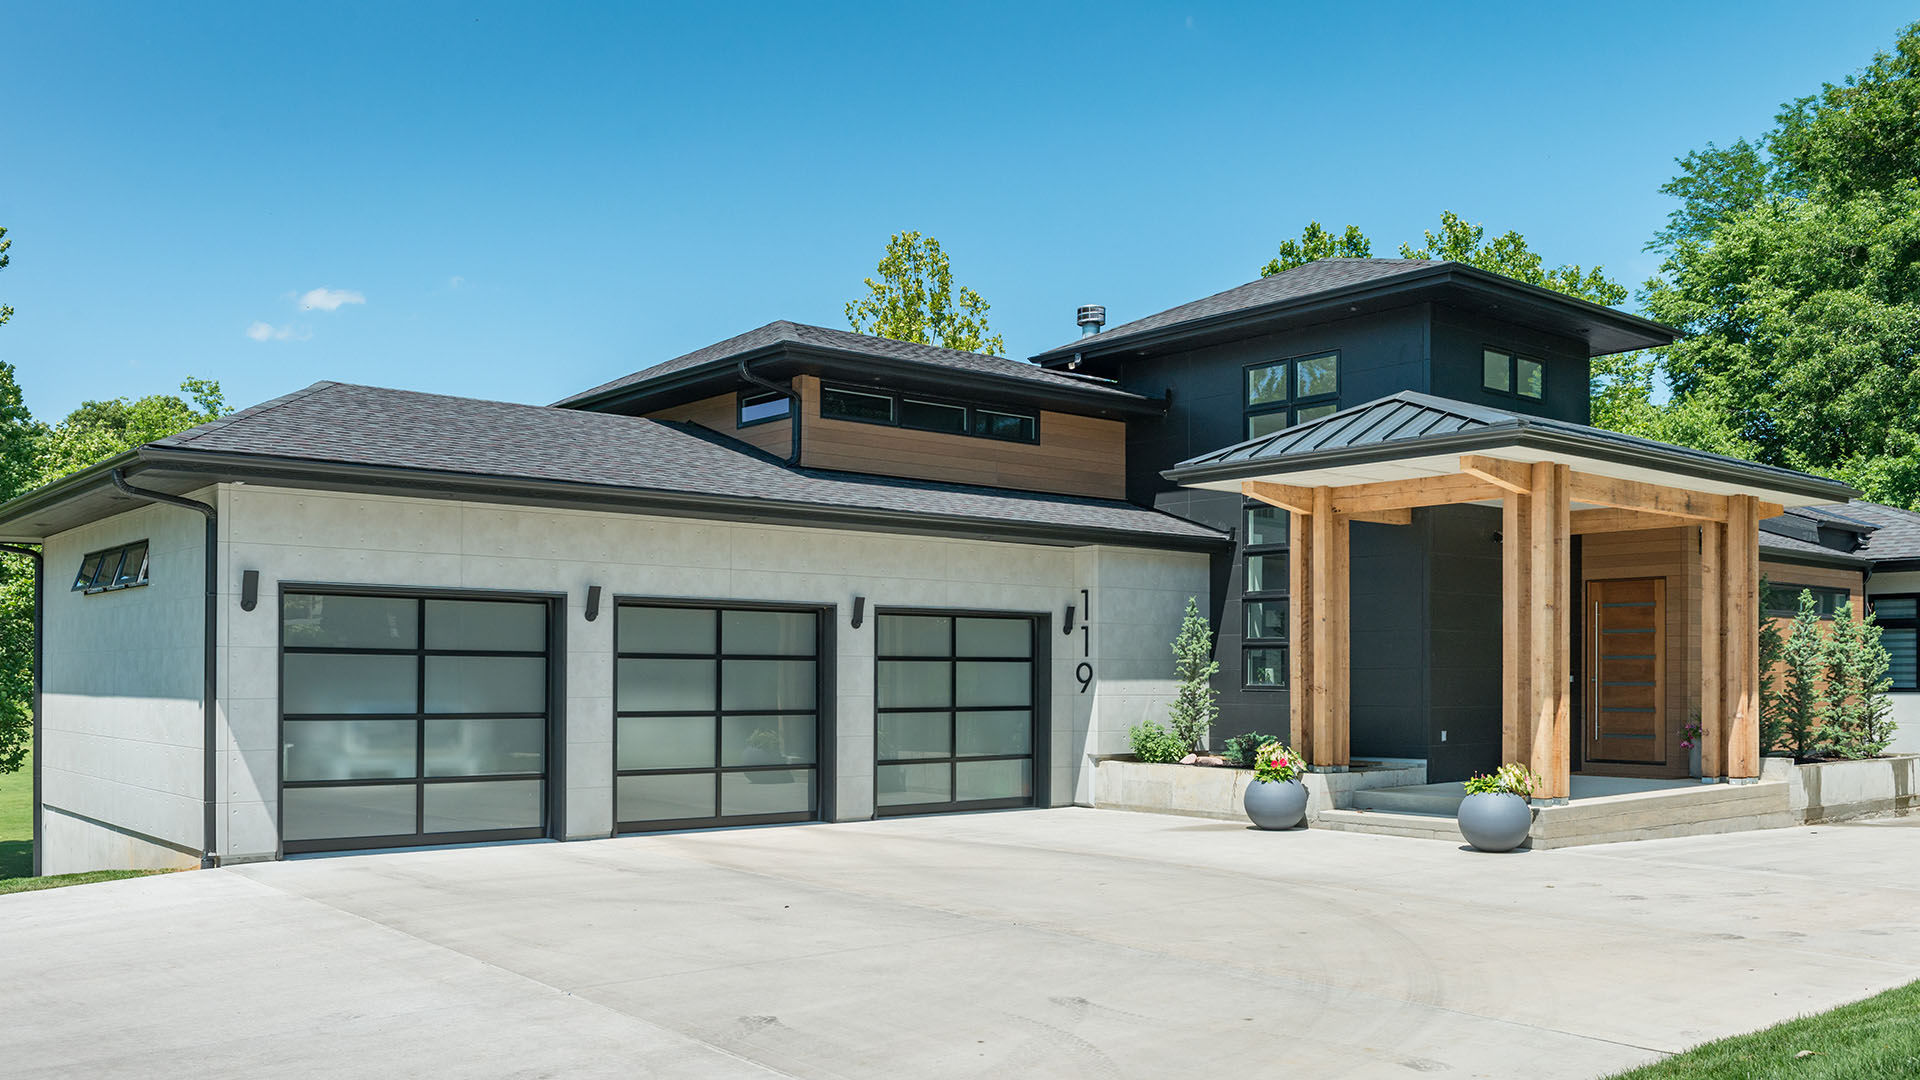 Modern home with three car garage and EmpireBlock panels from Nichiha